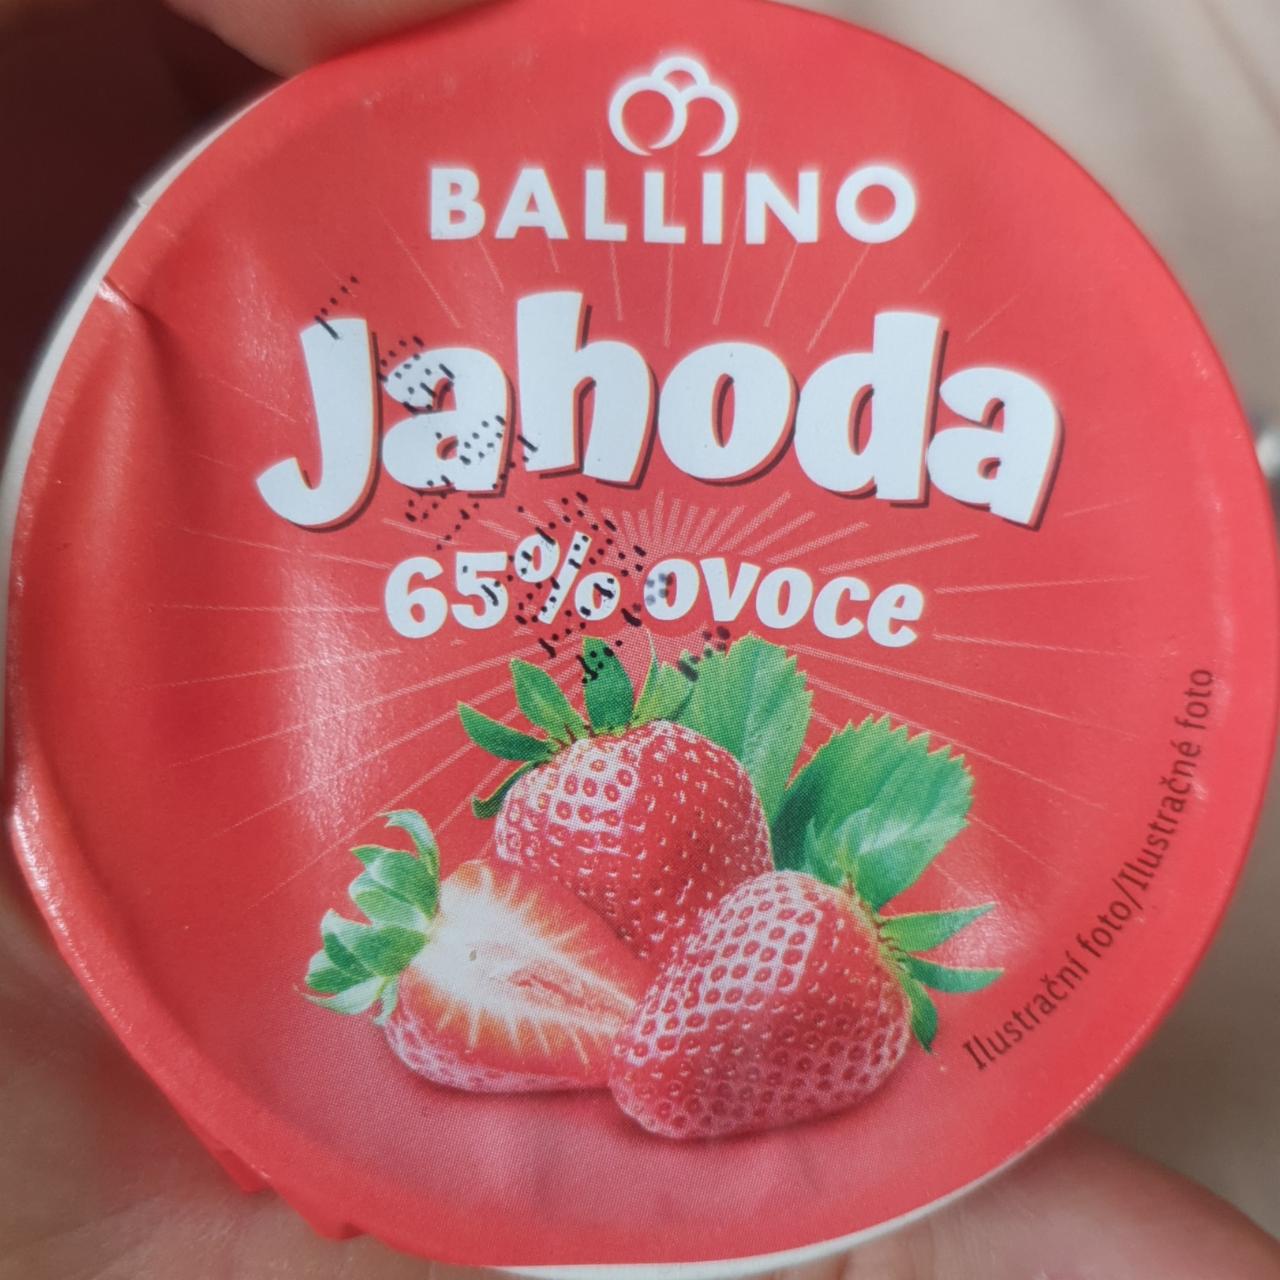 Fotografie - Jahoda 65% ovoce Ballino